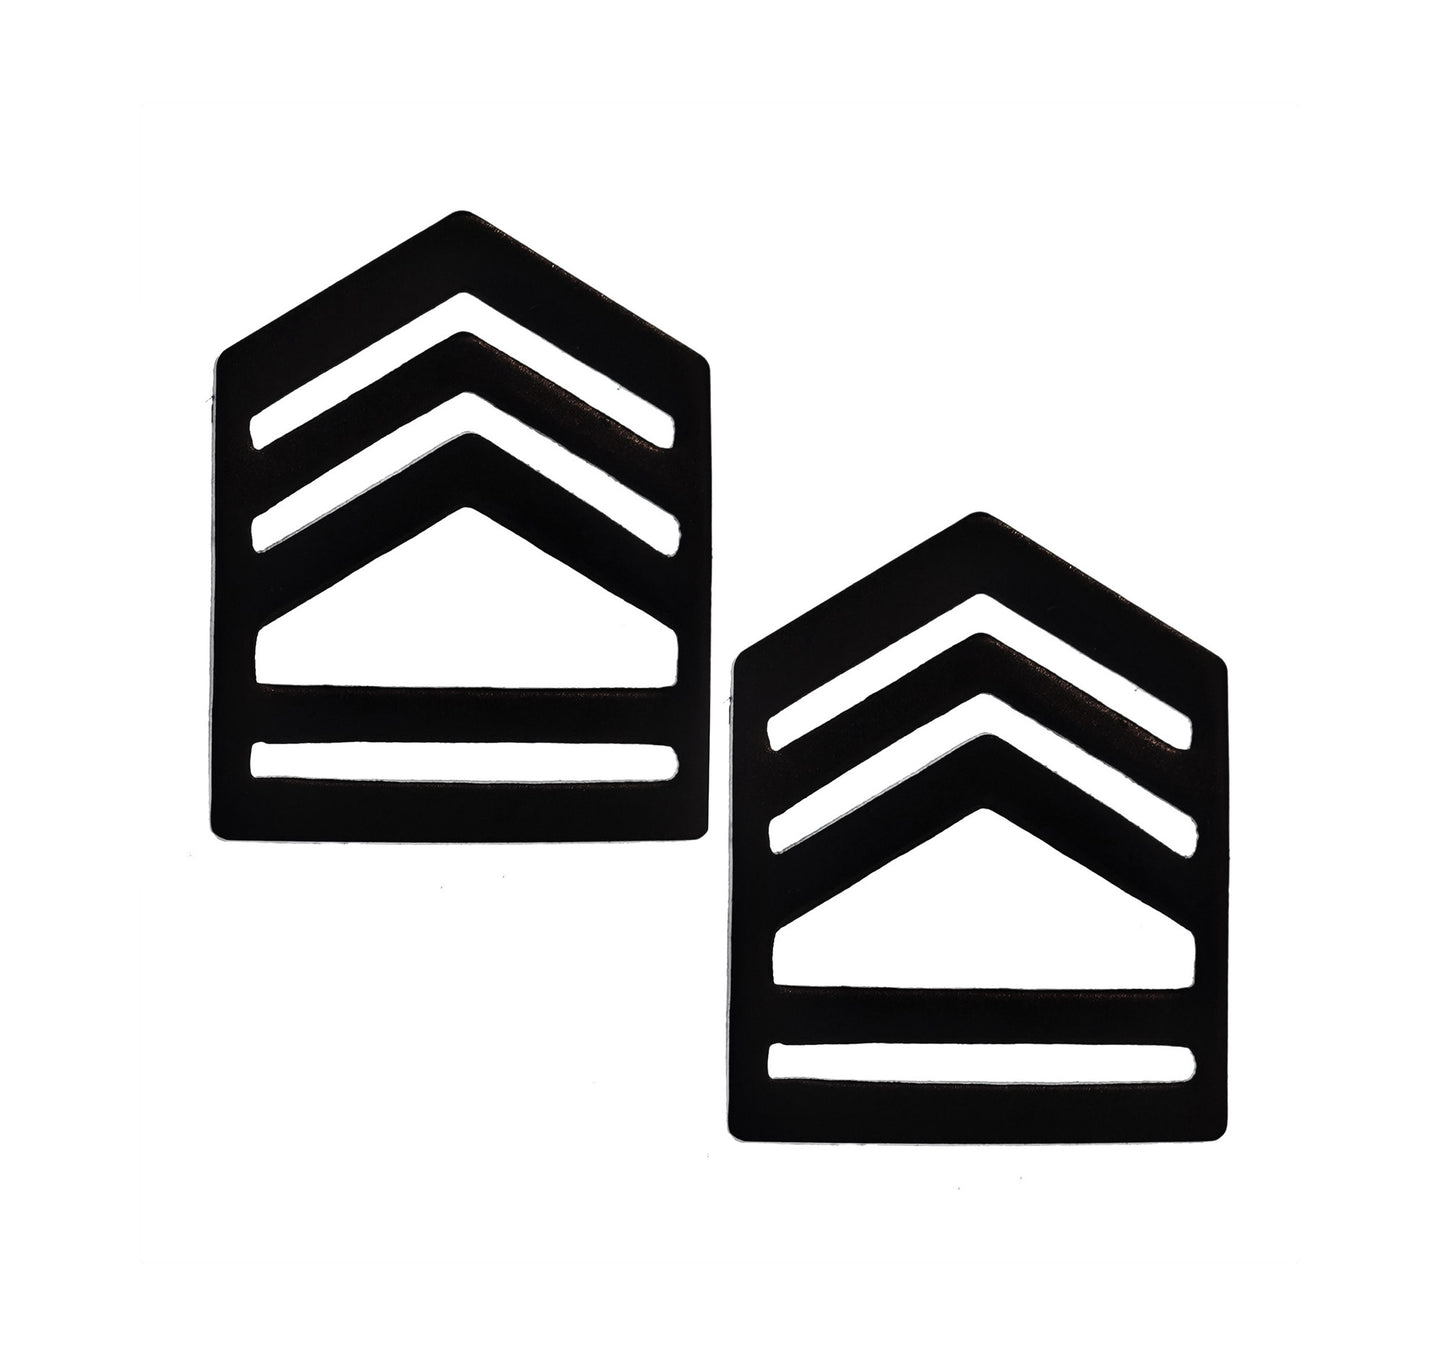 ROTC Sergeant First Class STA-BRITE® (Black) Rank Pin-on (pair)